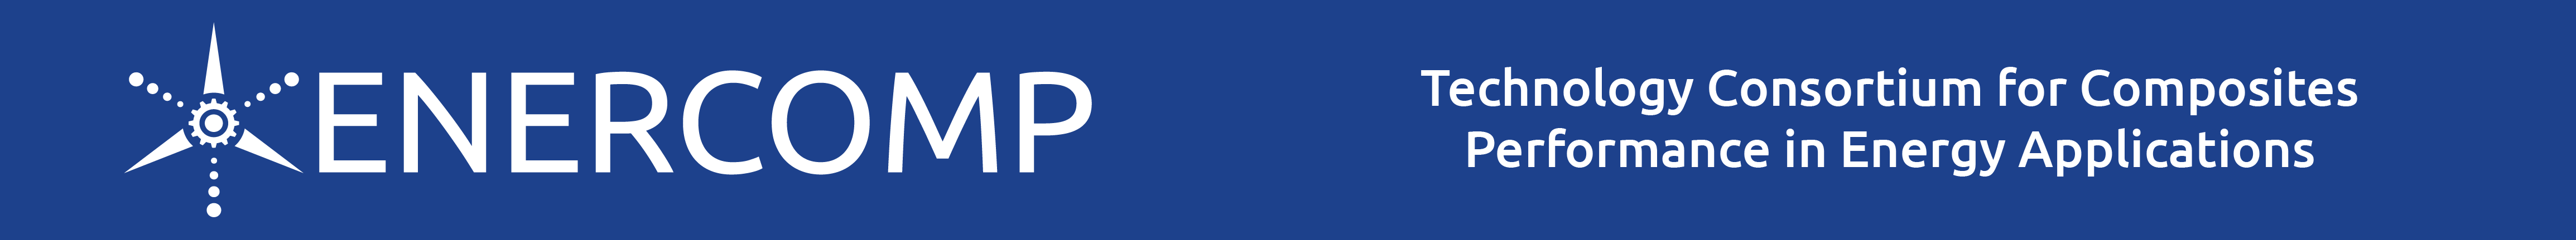 ENERCOMP logo blue background 600x100-01